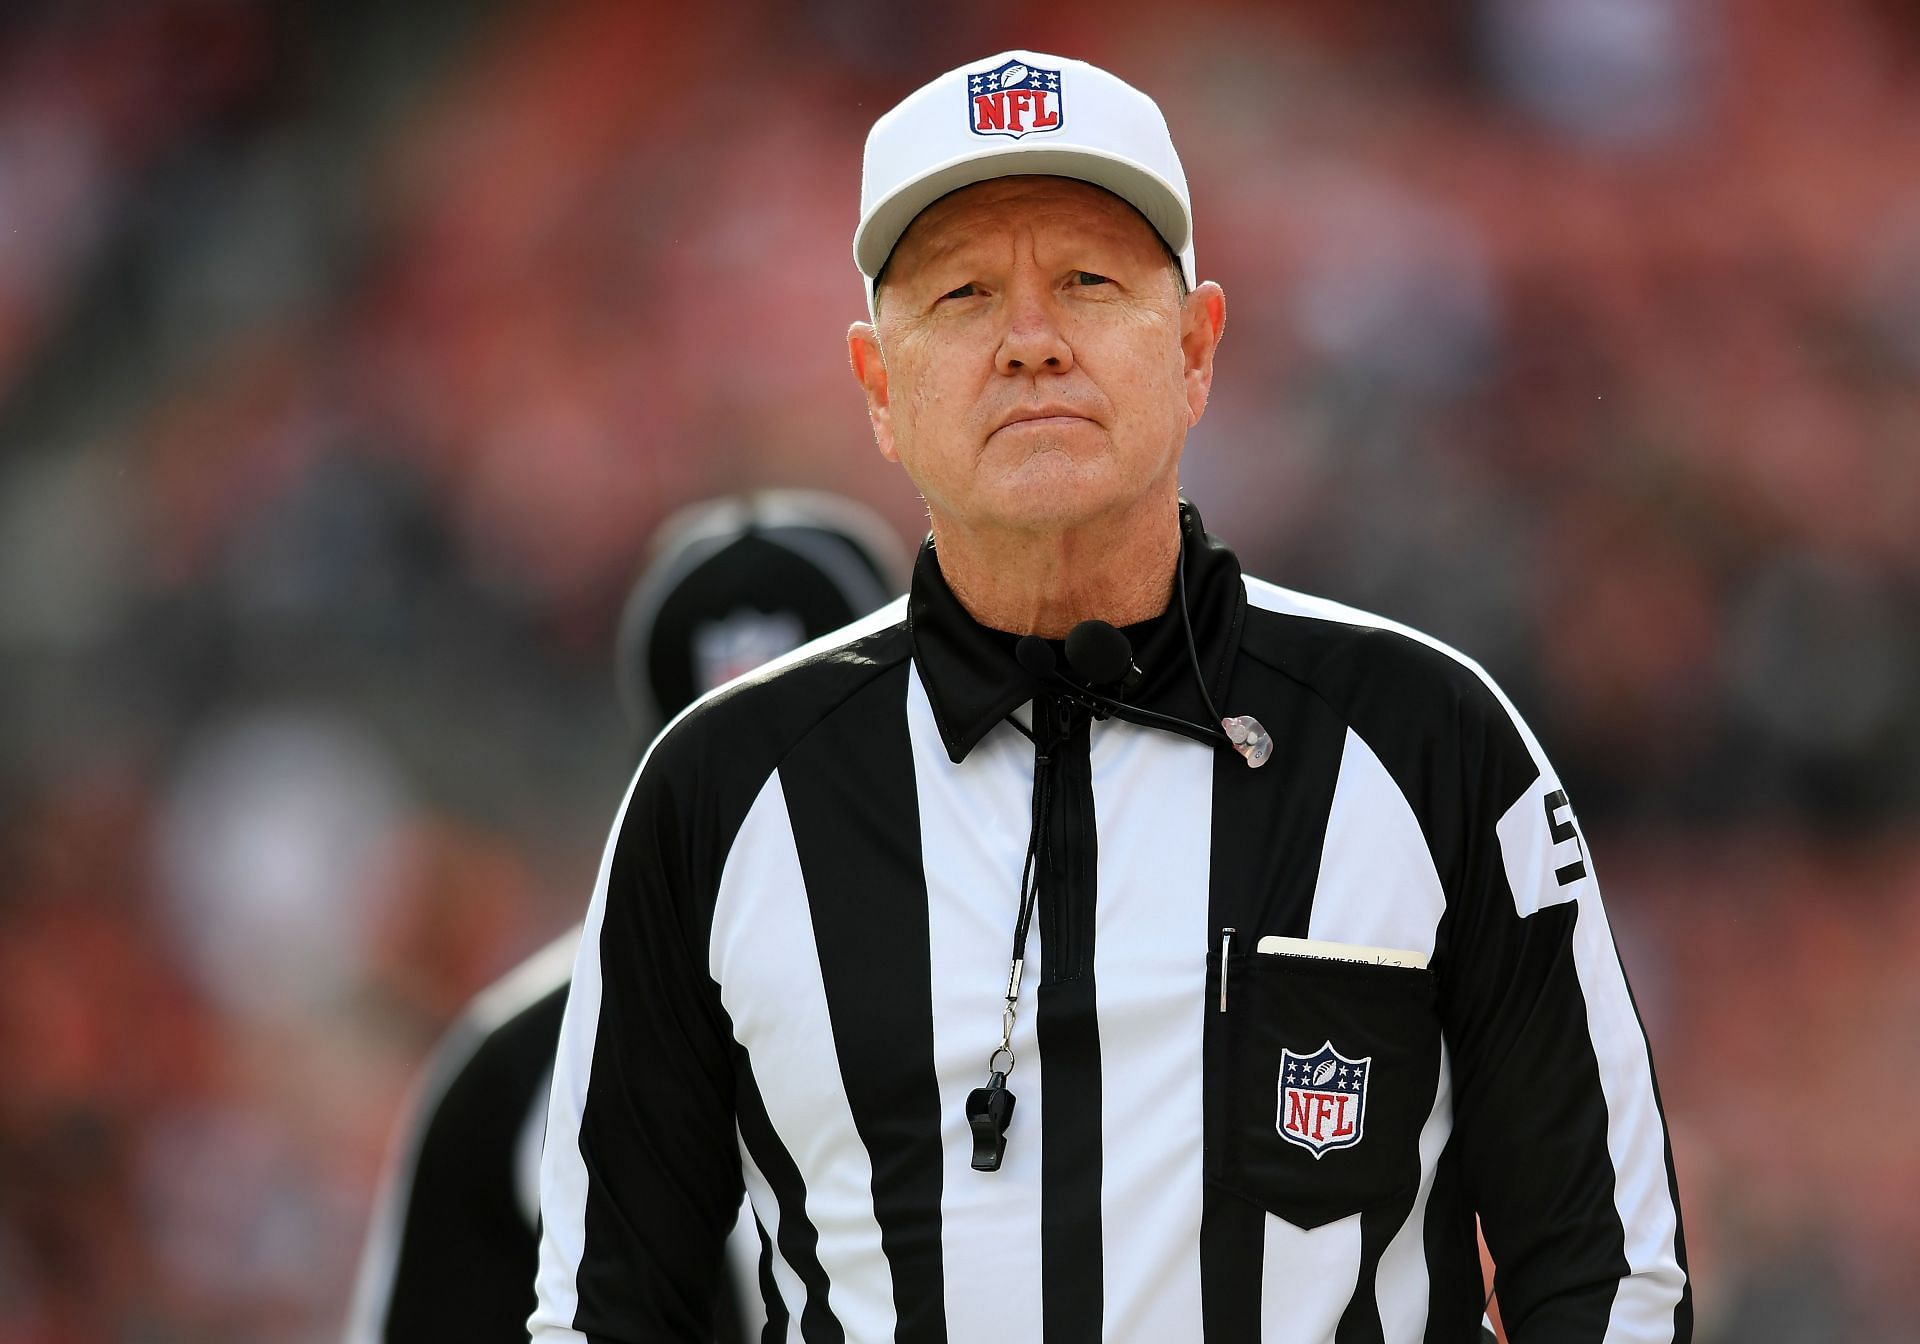 NFL referee Carl Cheffers